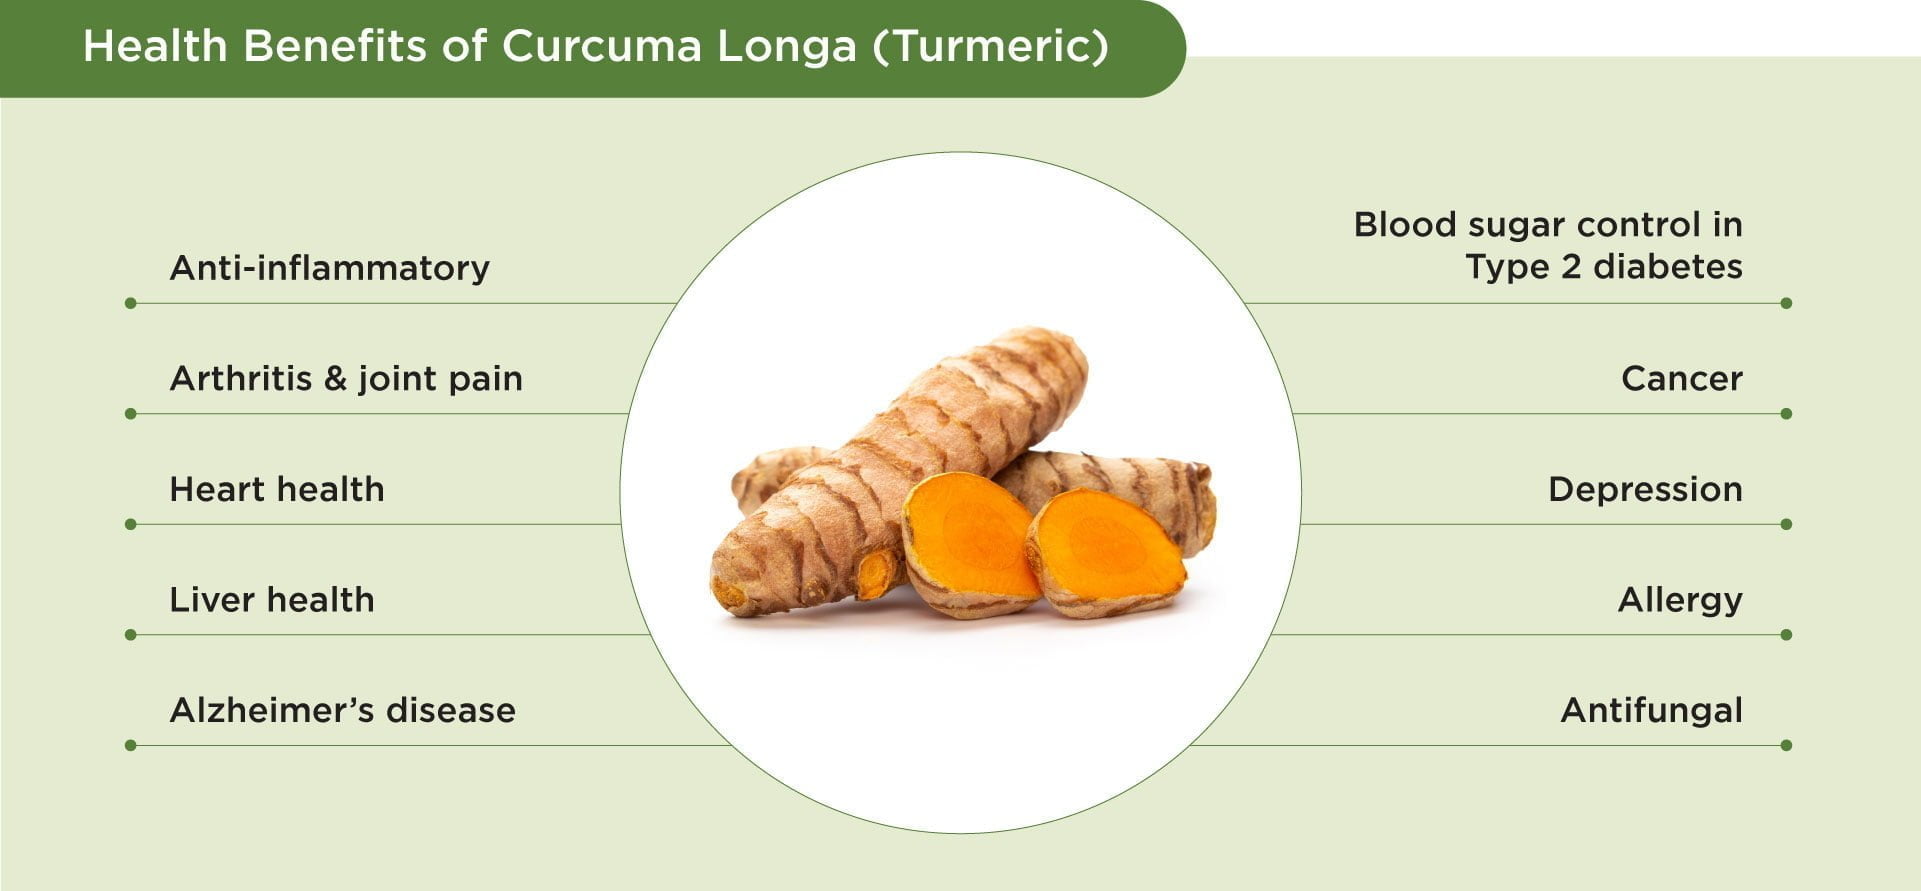 Benefits of turmeric